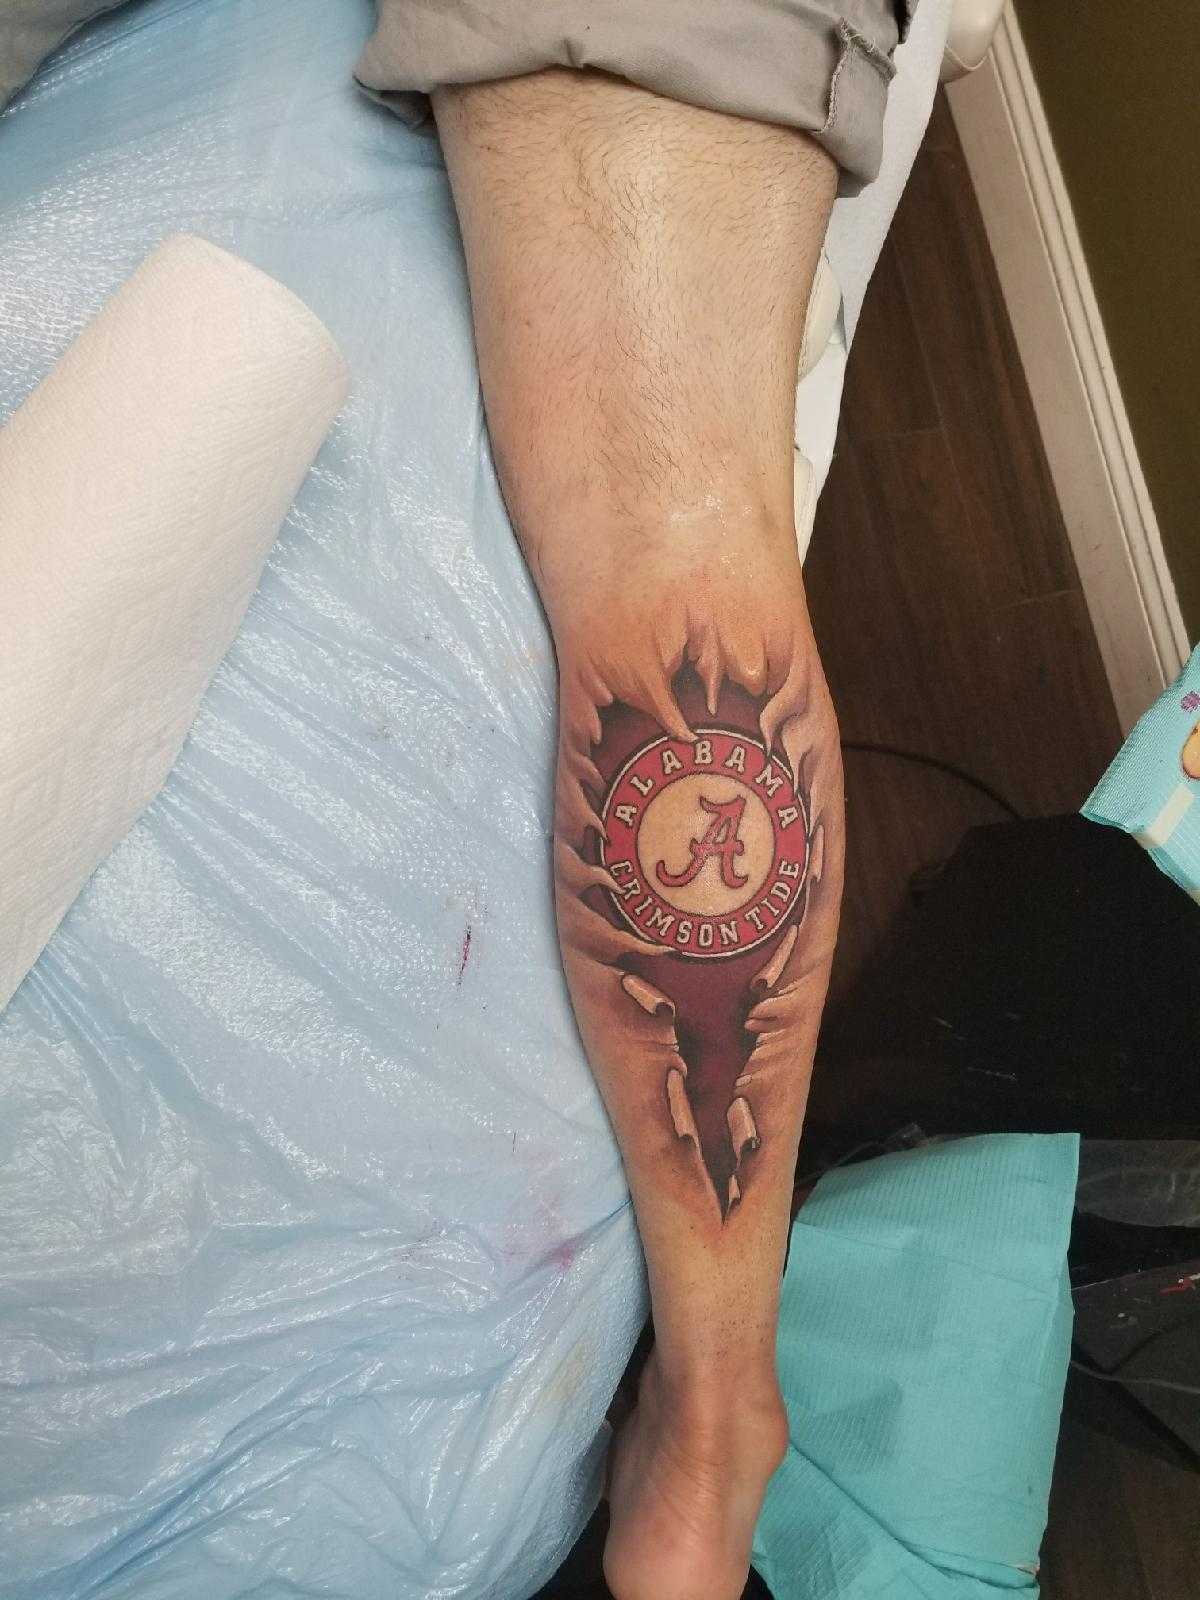 He Bleeds Crimson: Alabama fan gets crazy calf tattoo (photos)